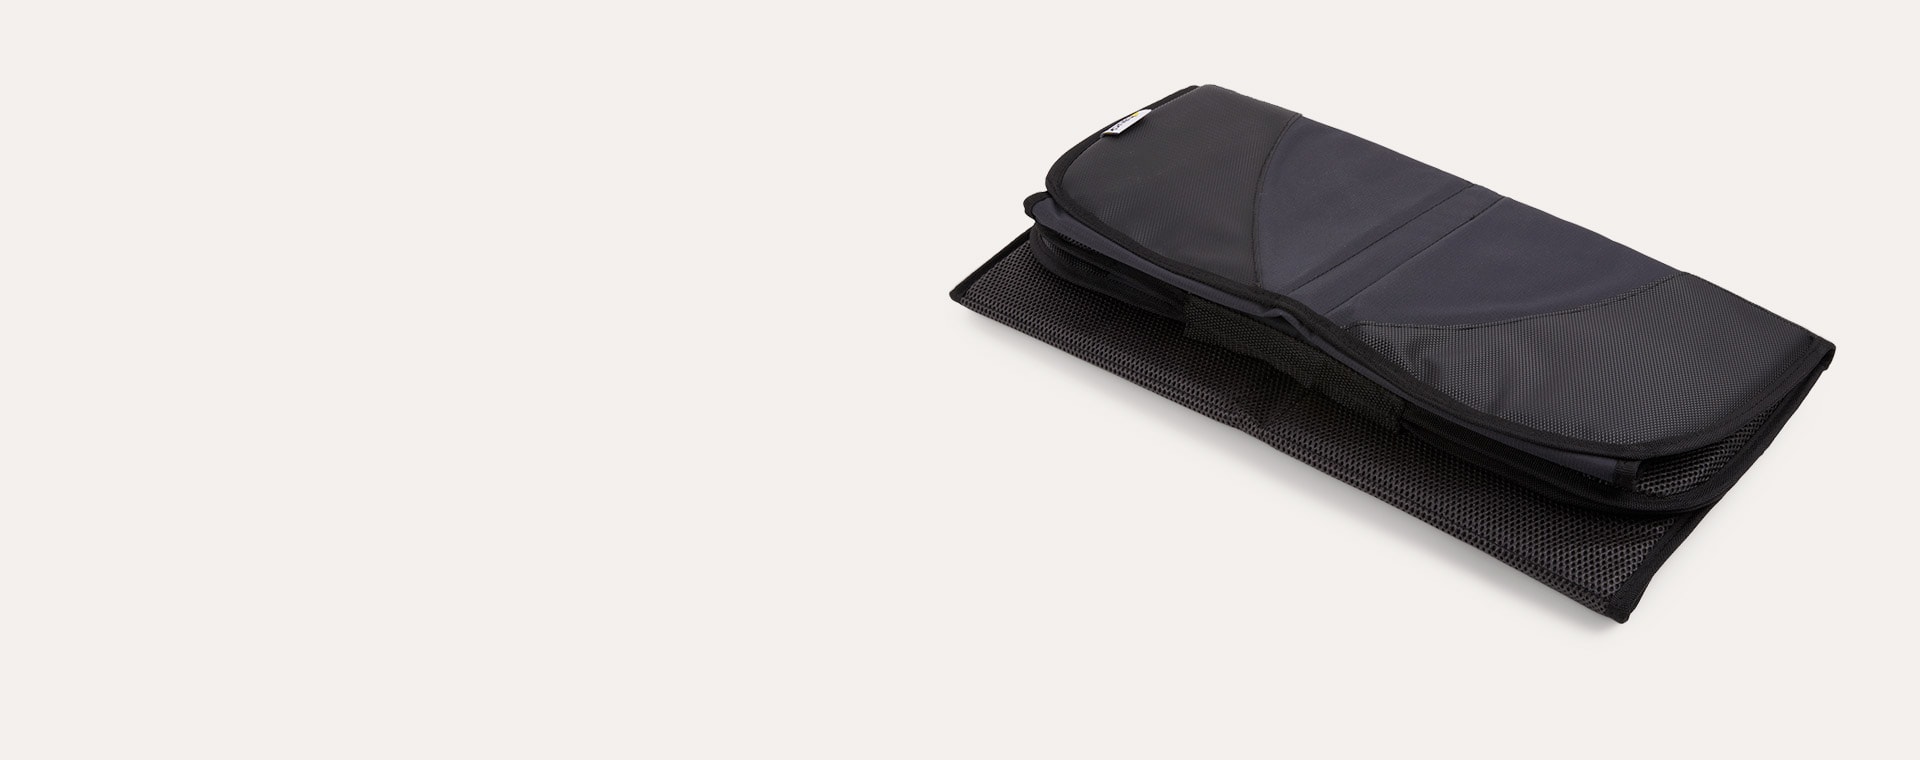 Black hauck Deluxe - Car Seat Protector